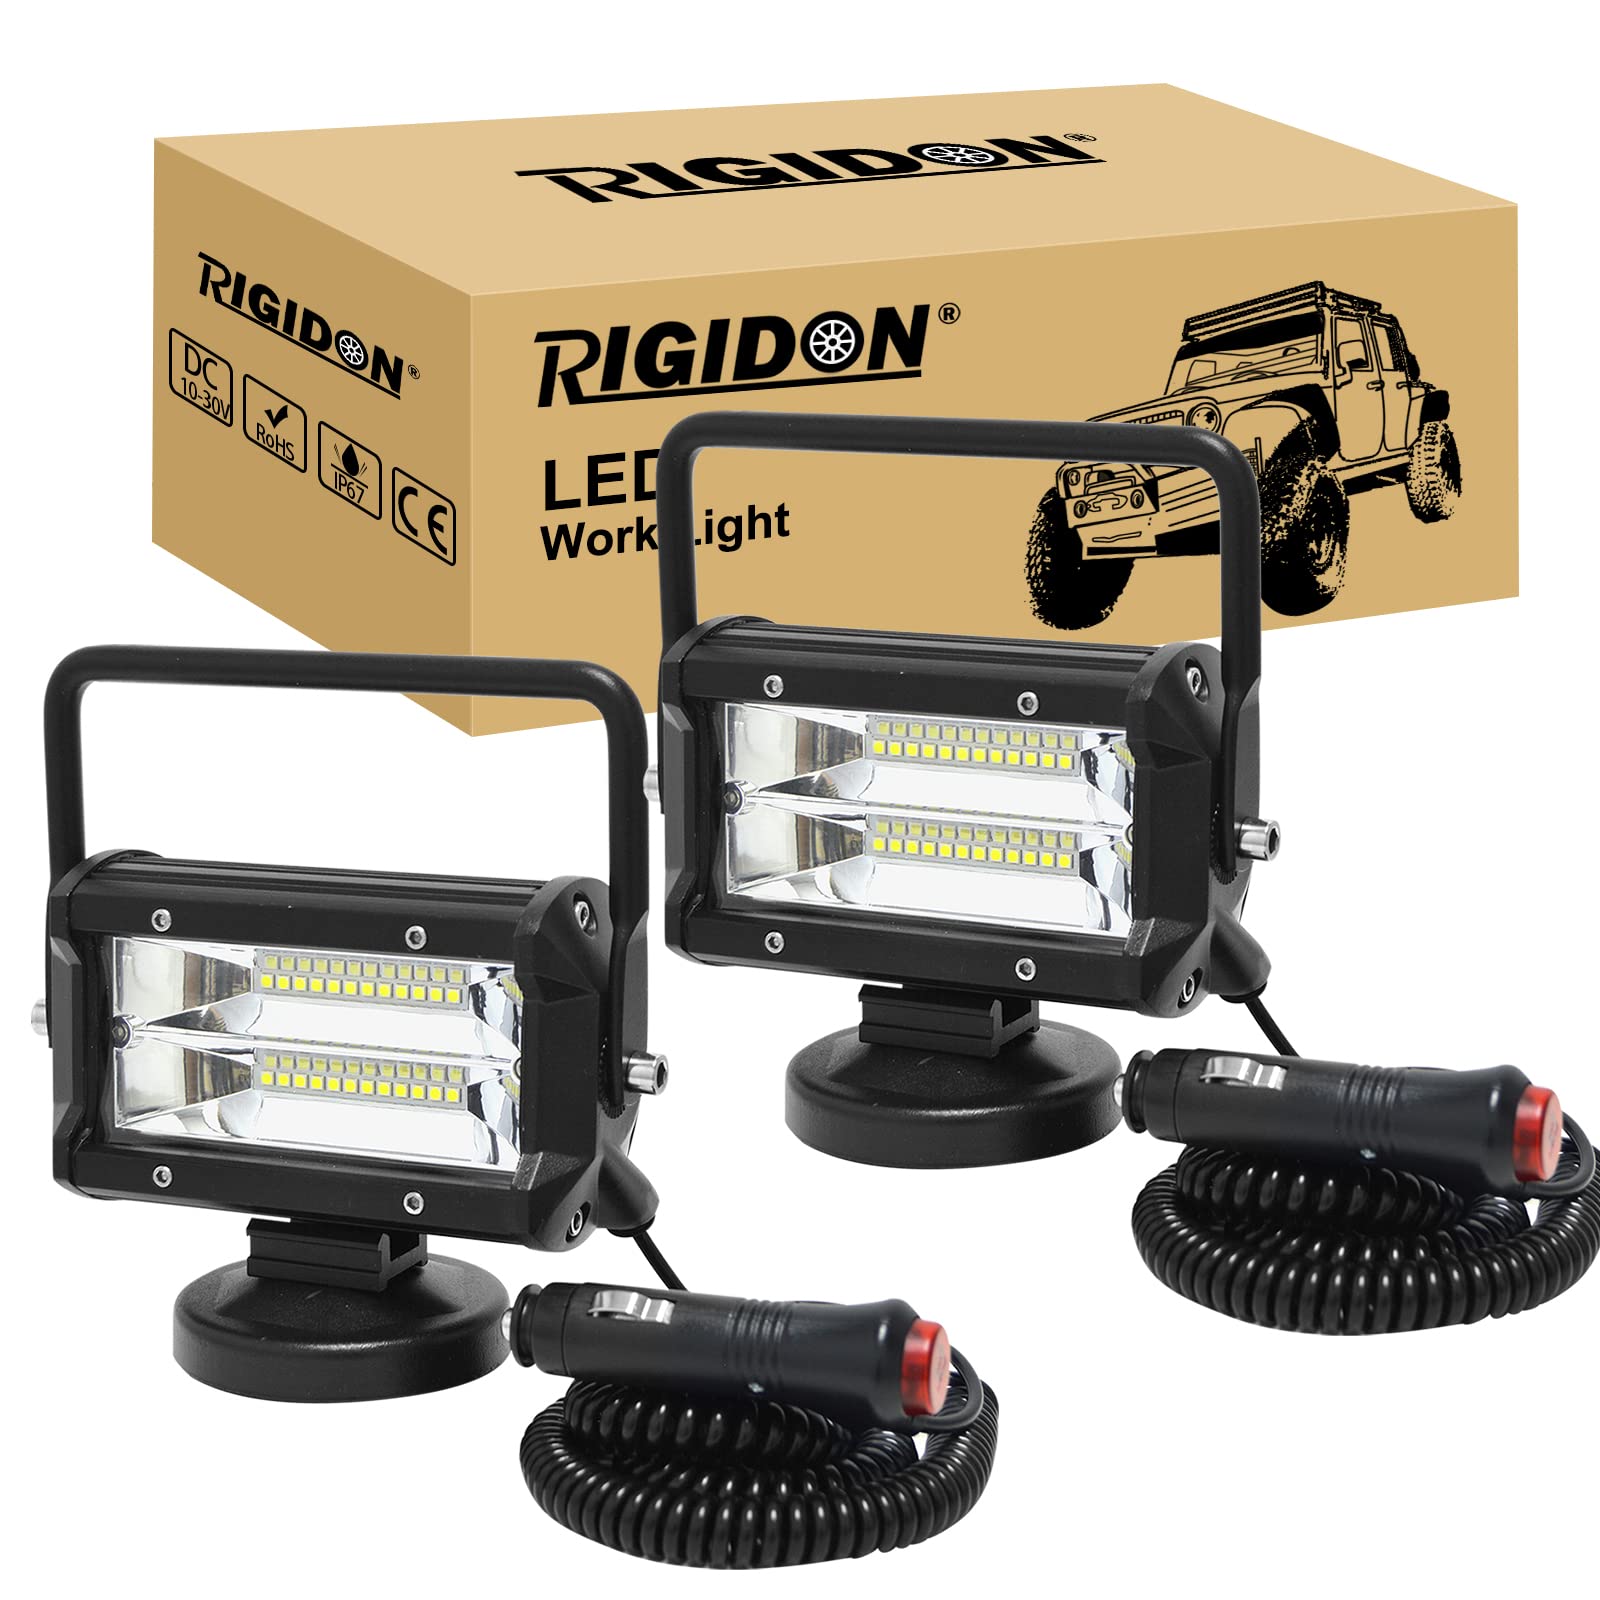 RIGIDON 2 Pcs Led arbeitsscheinwerfer mit magnetfuß, 5 Zoll 13cm 72W 12V 24V led flutstrahler, offroad beleuchtung für Auto SUV ATV, Traktor, LKW, 4x4, Boot,6000K led suchscheinwerfer, arbeitslicht von RIGIDON